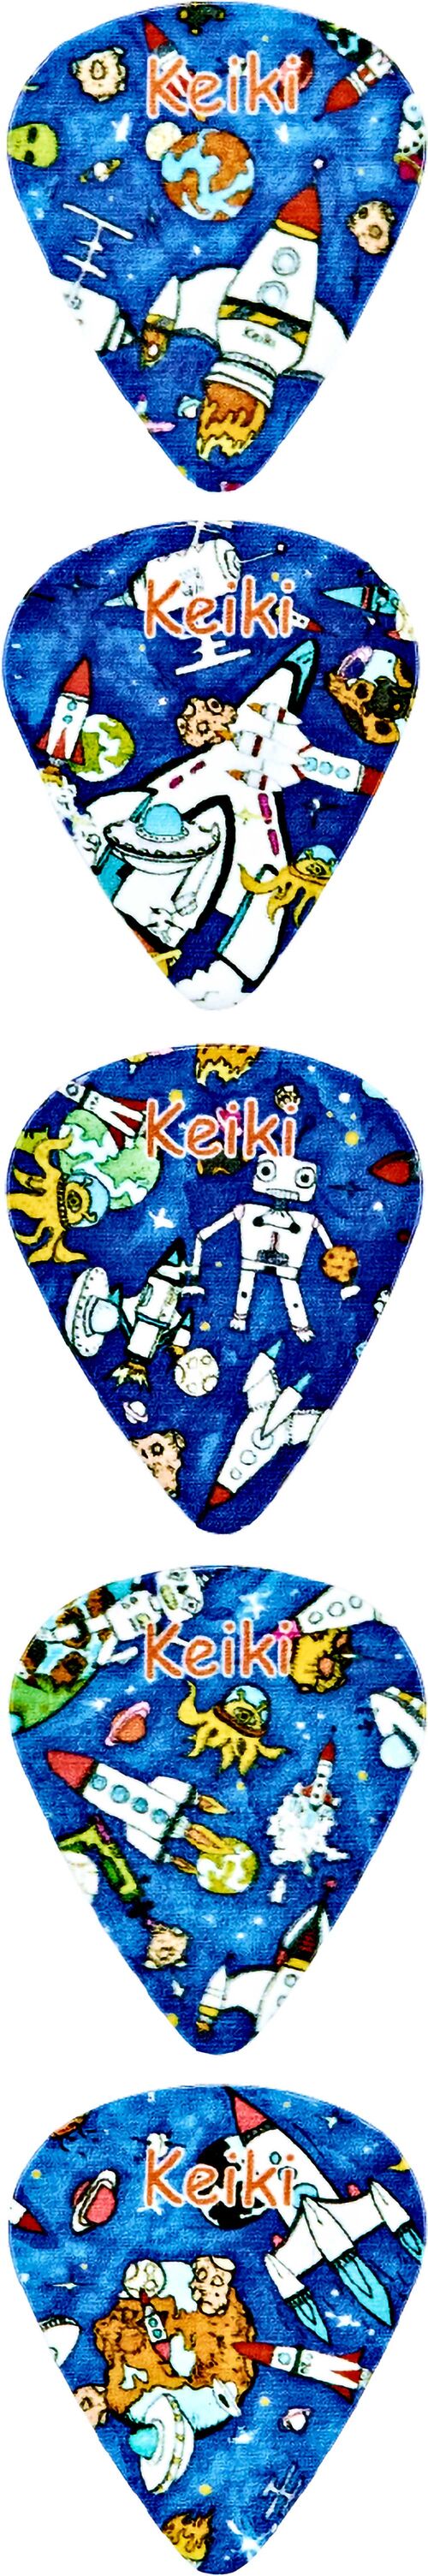 Keiki Pack de Pas Kpsp-5